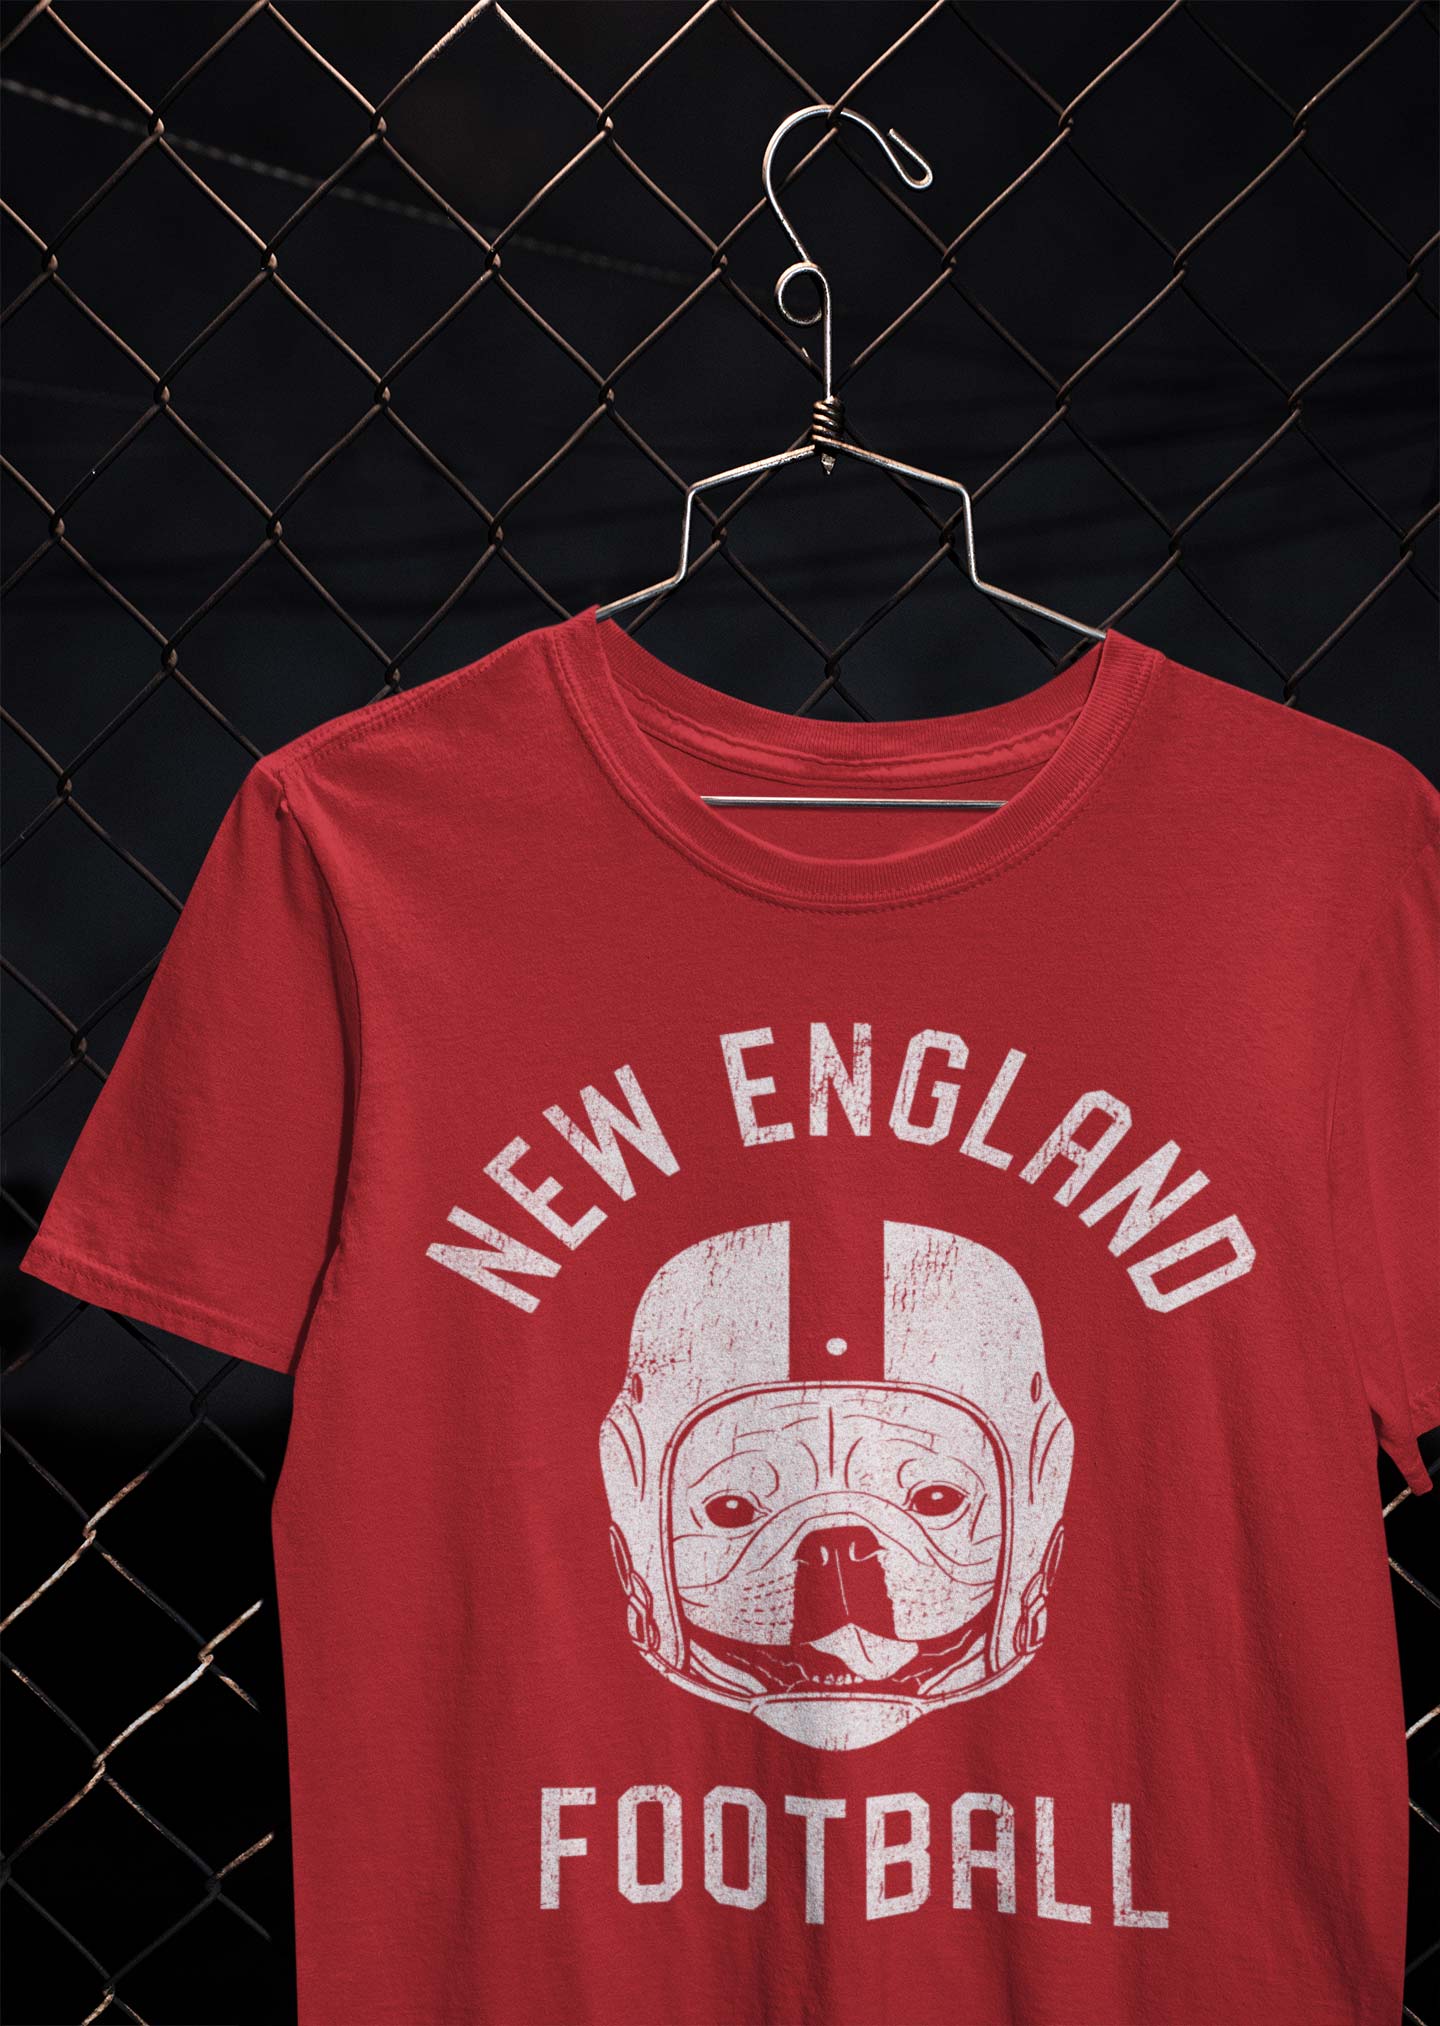 New England Football French Bulldog T-Shirt